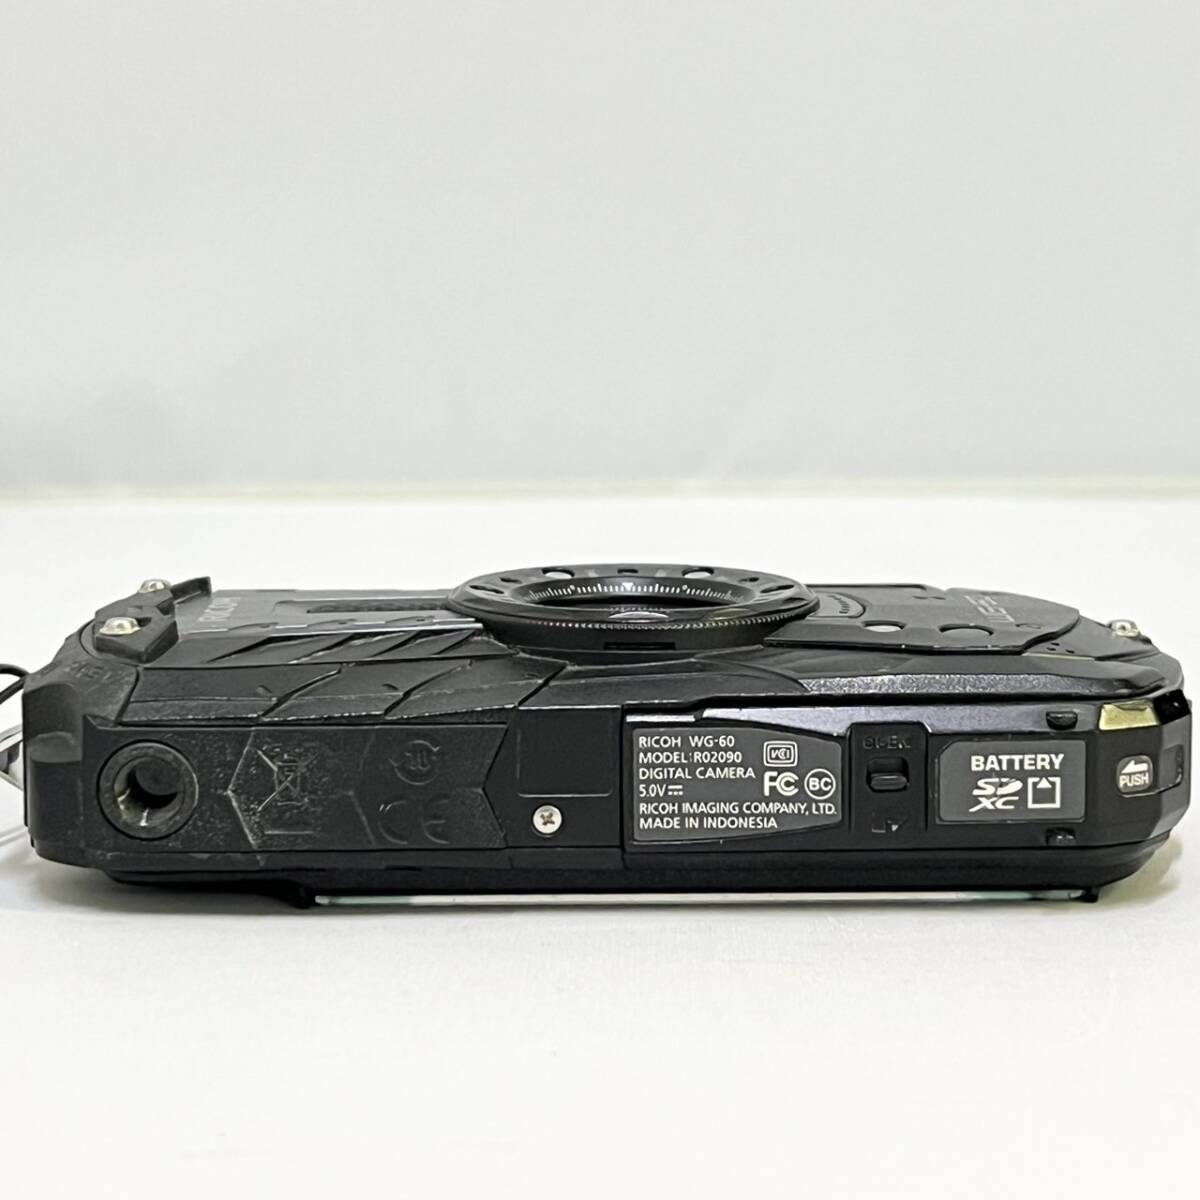 BEg090I 60 RICOH WG-60 リコー デジタルカメラ ブラック 防水カメラ 14m防水 耐衝撃 防塵 耐寒 1600万画素 マーメードモード搭載_画像6